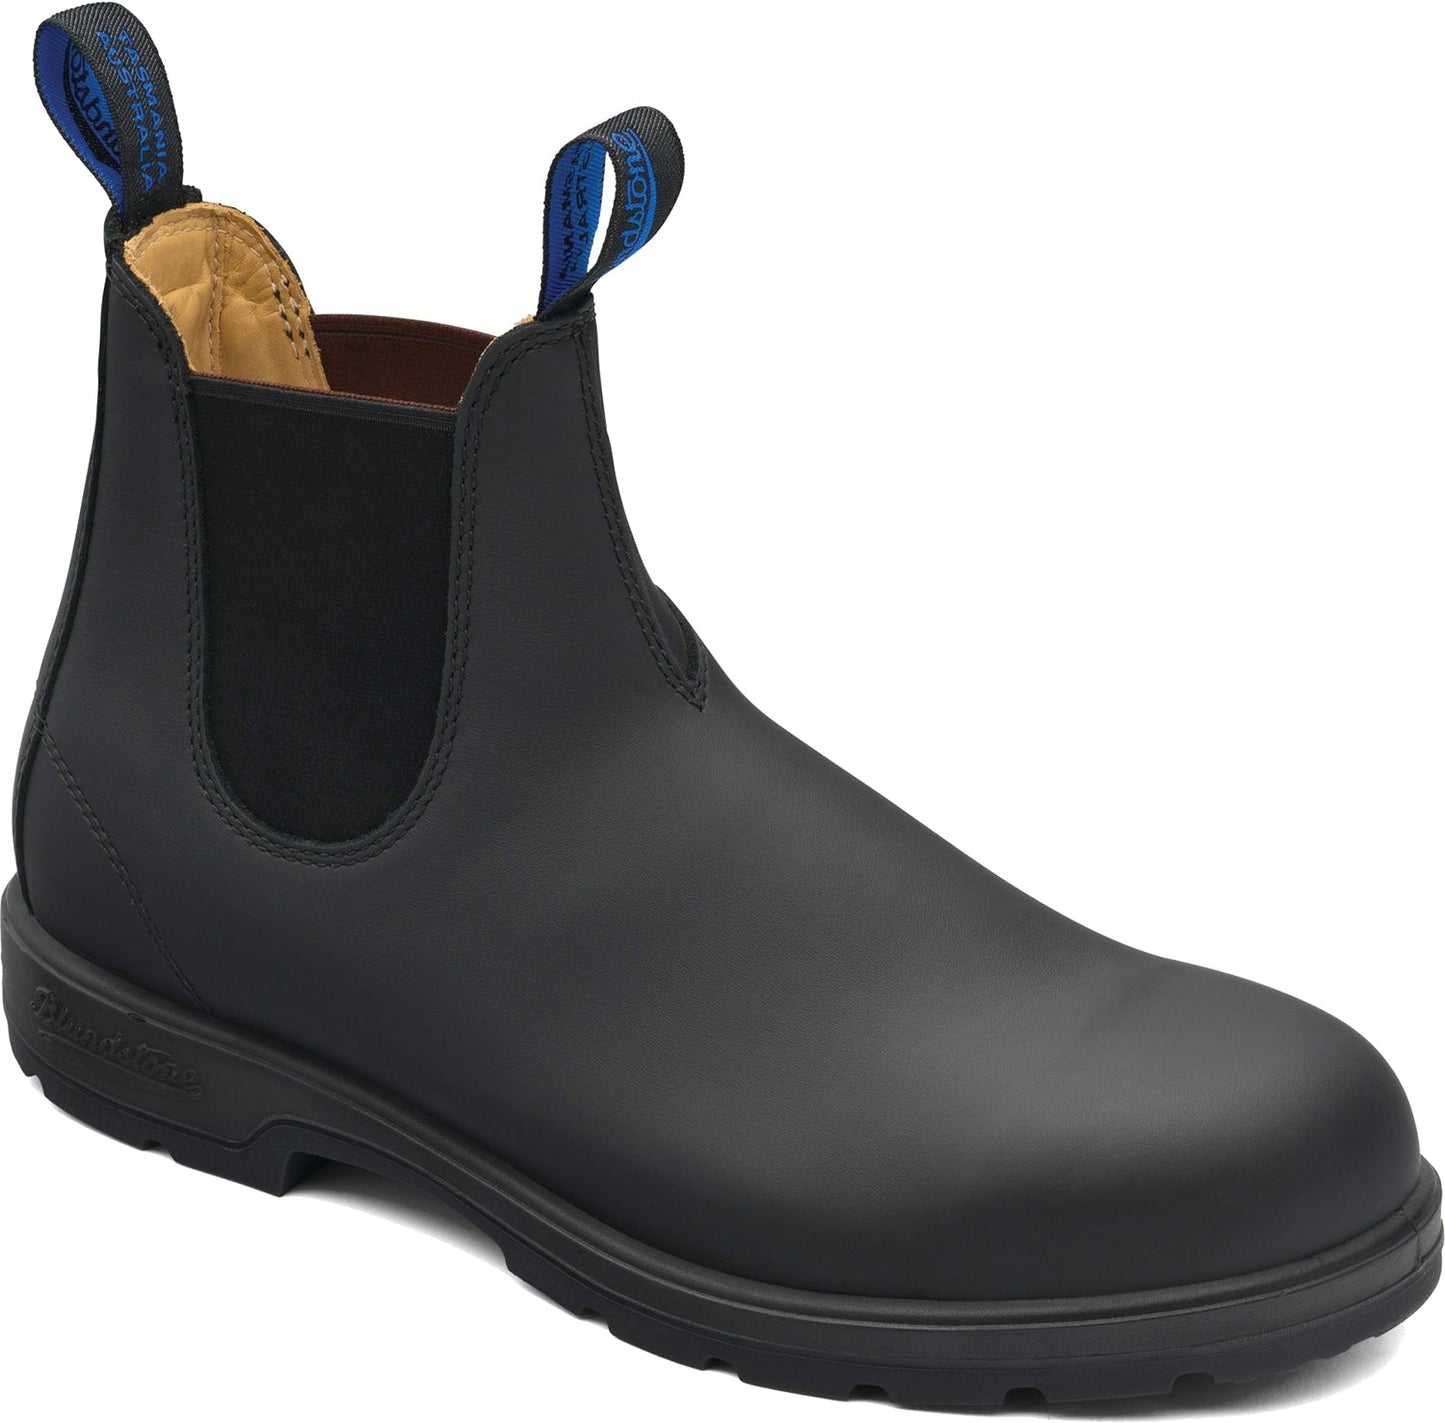 Blundstone 566 Winter Thermal Classic Black - Grady’s Feet Essentials - Blundstone